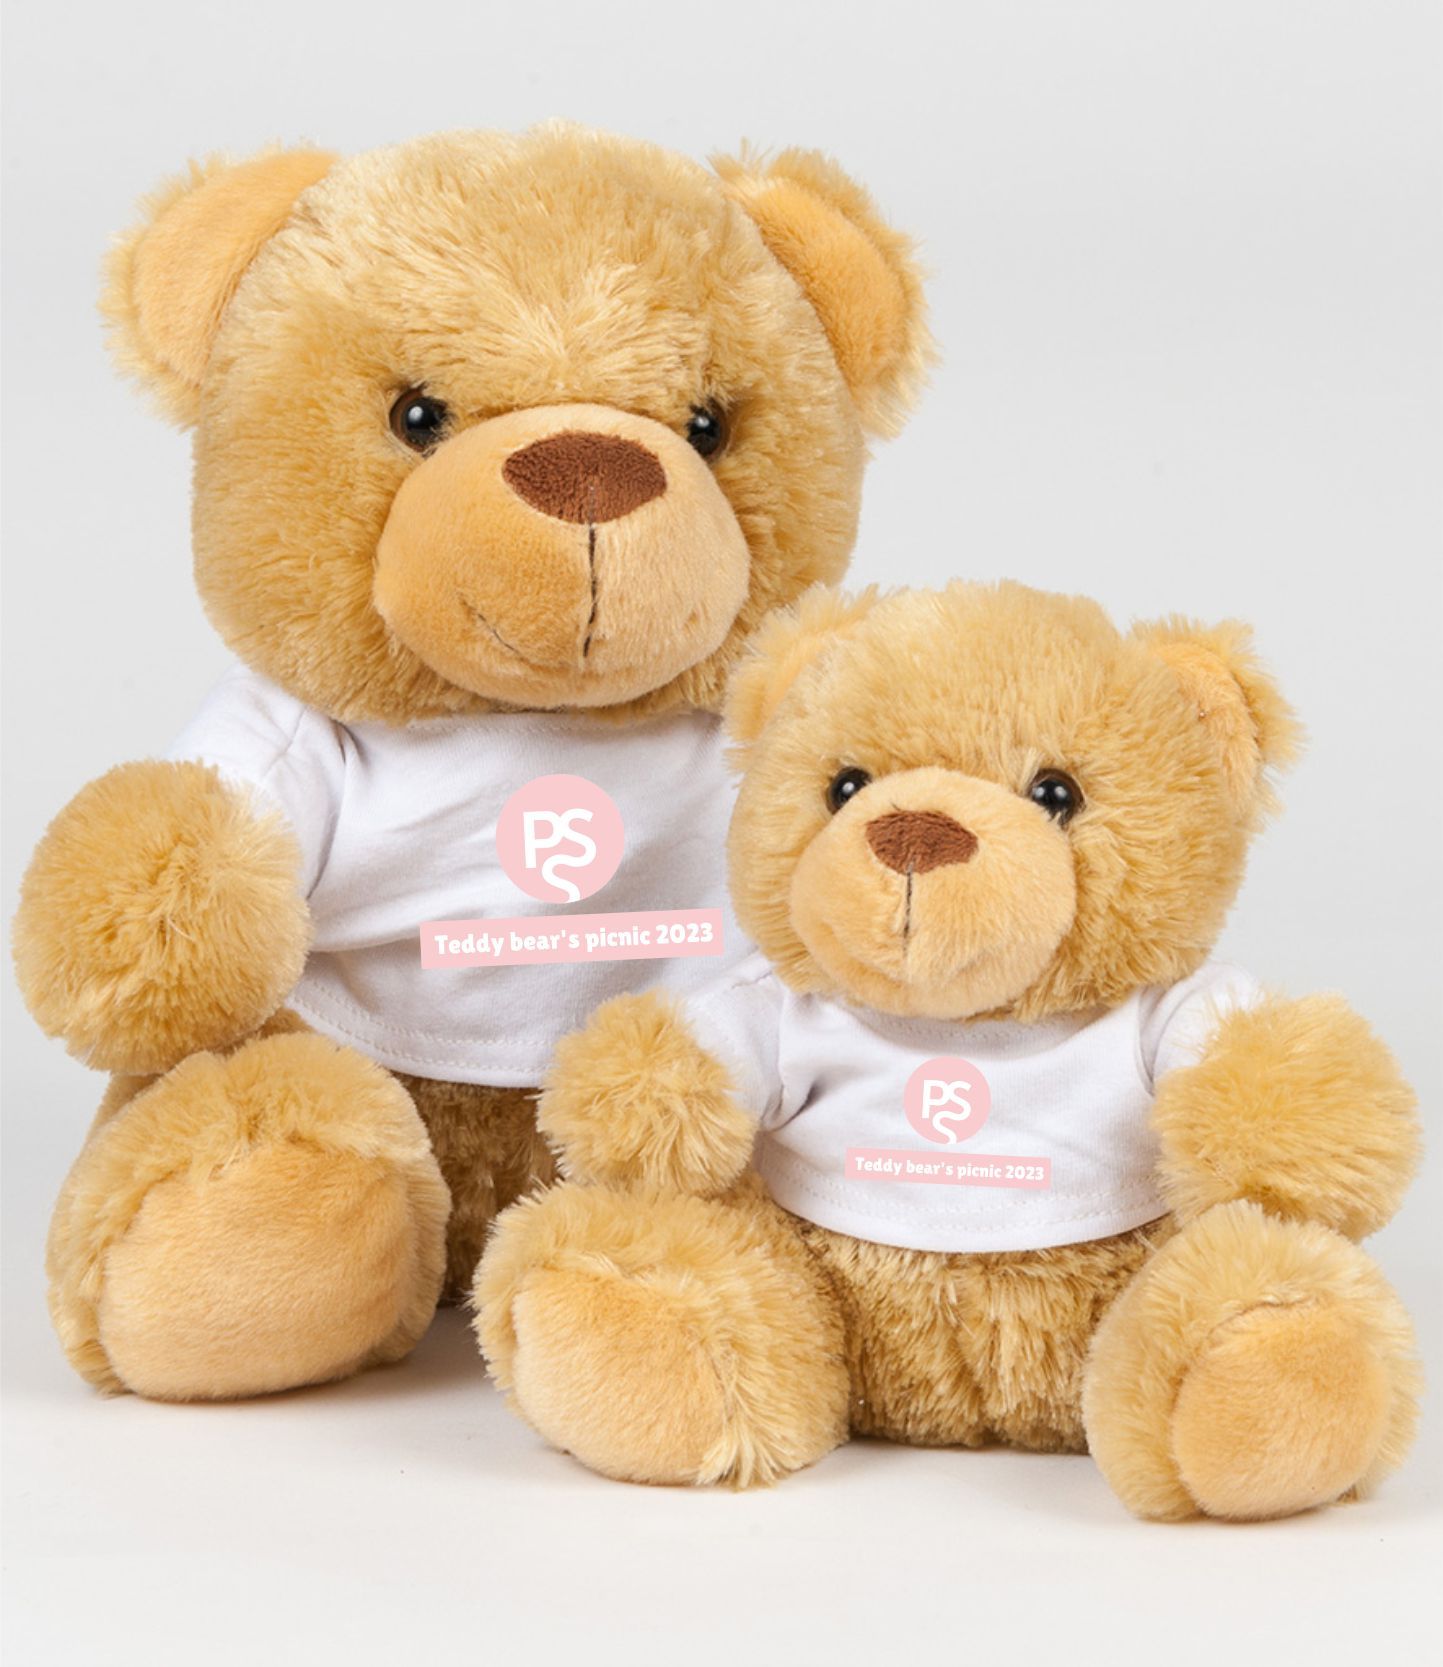 PSS - Teddy Bears Picnic Teddy